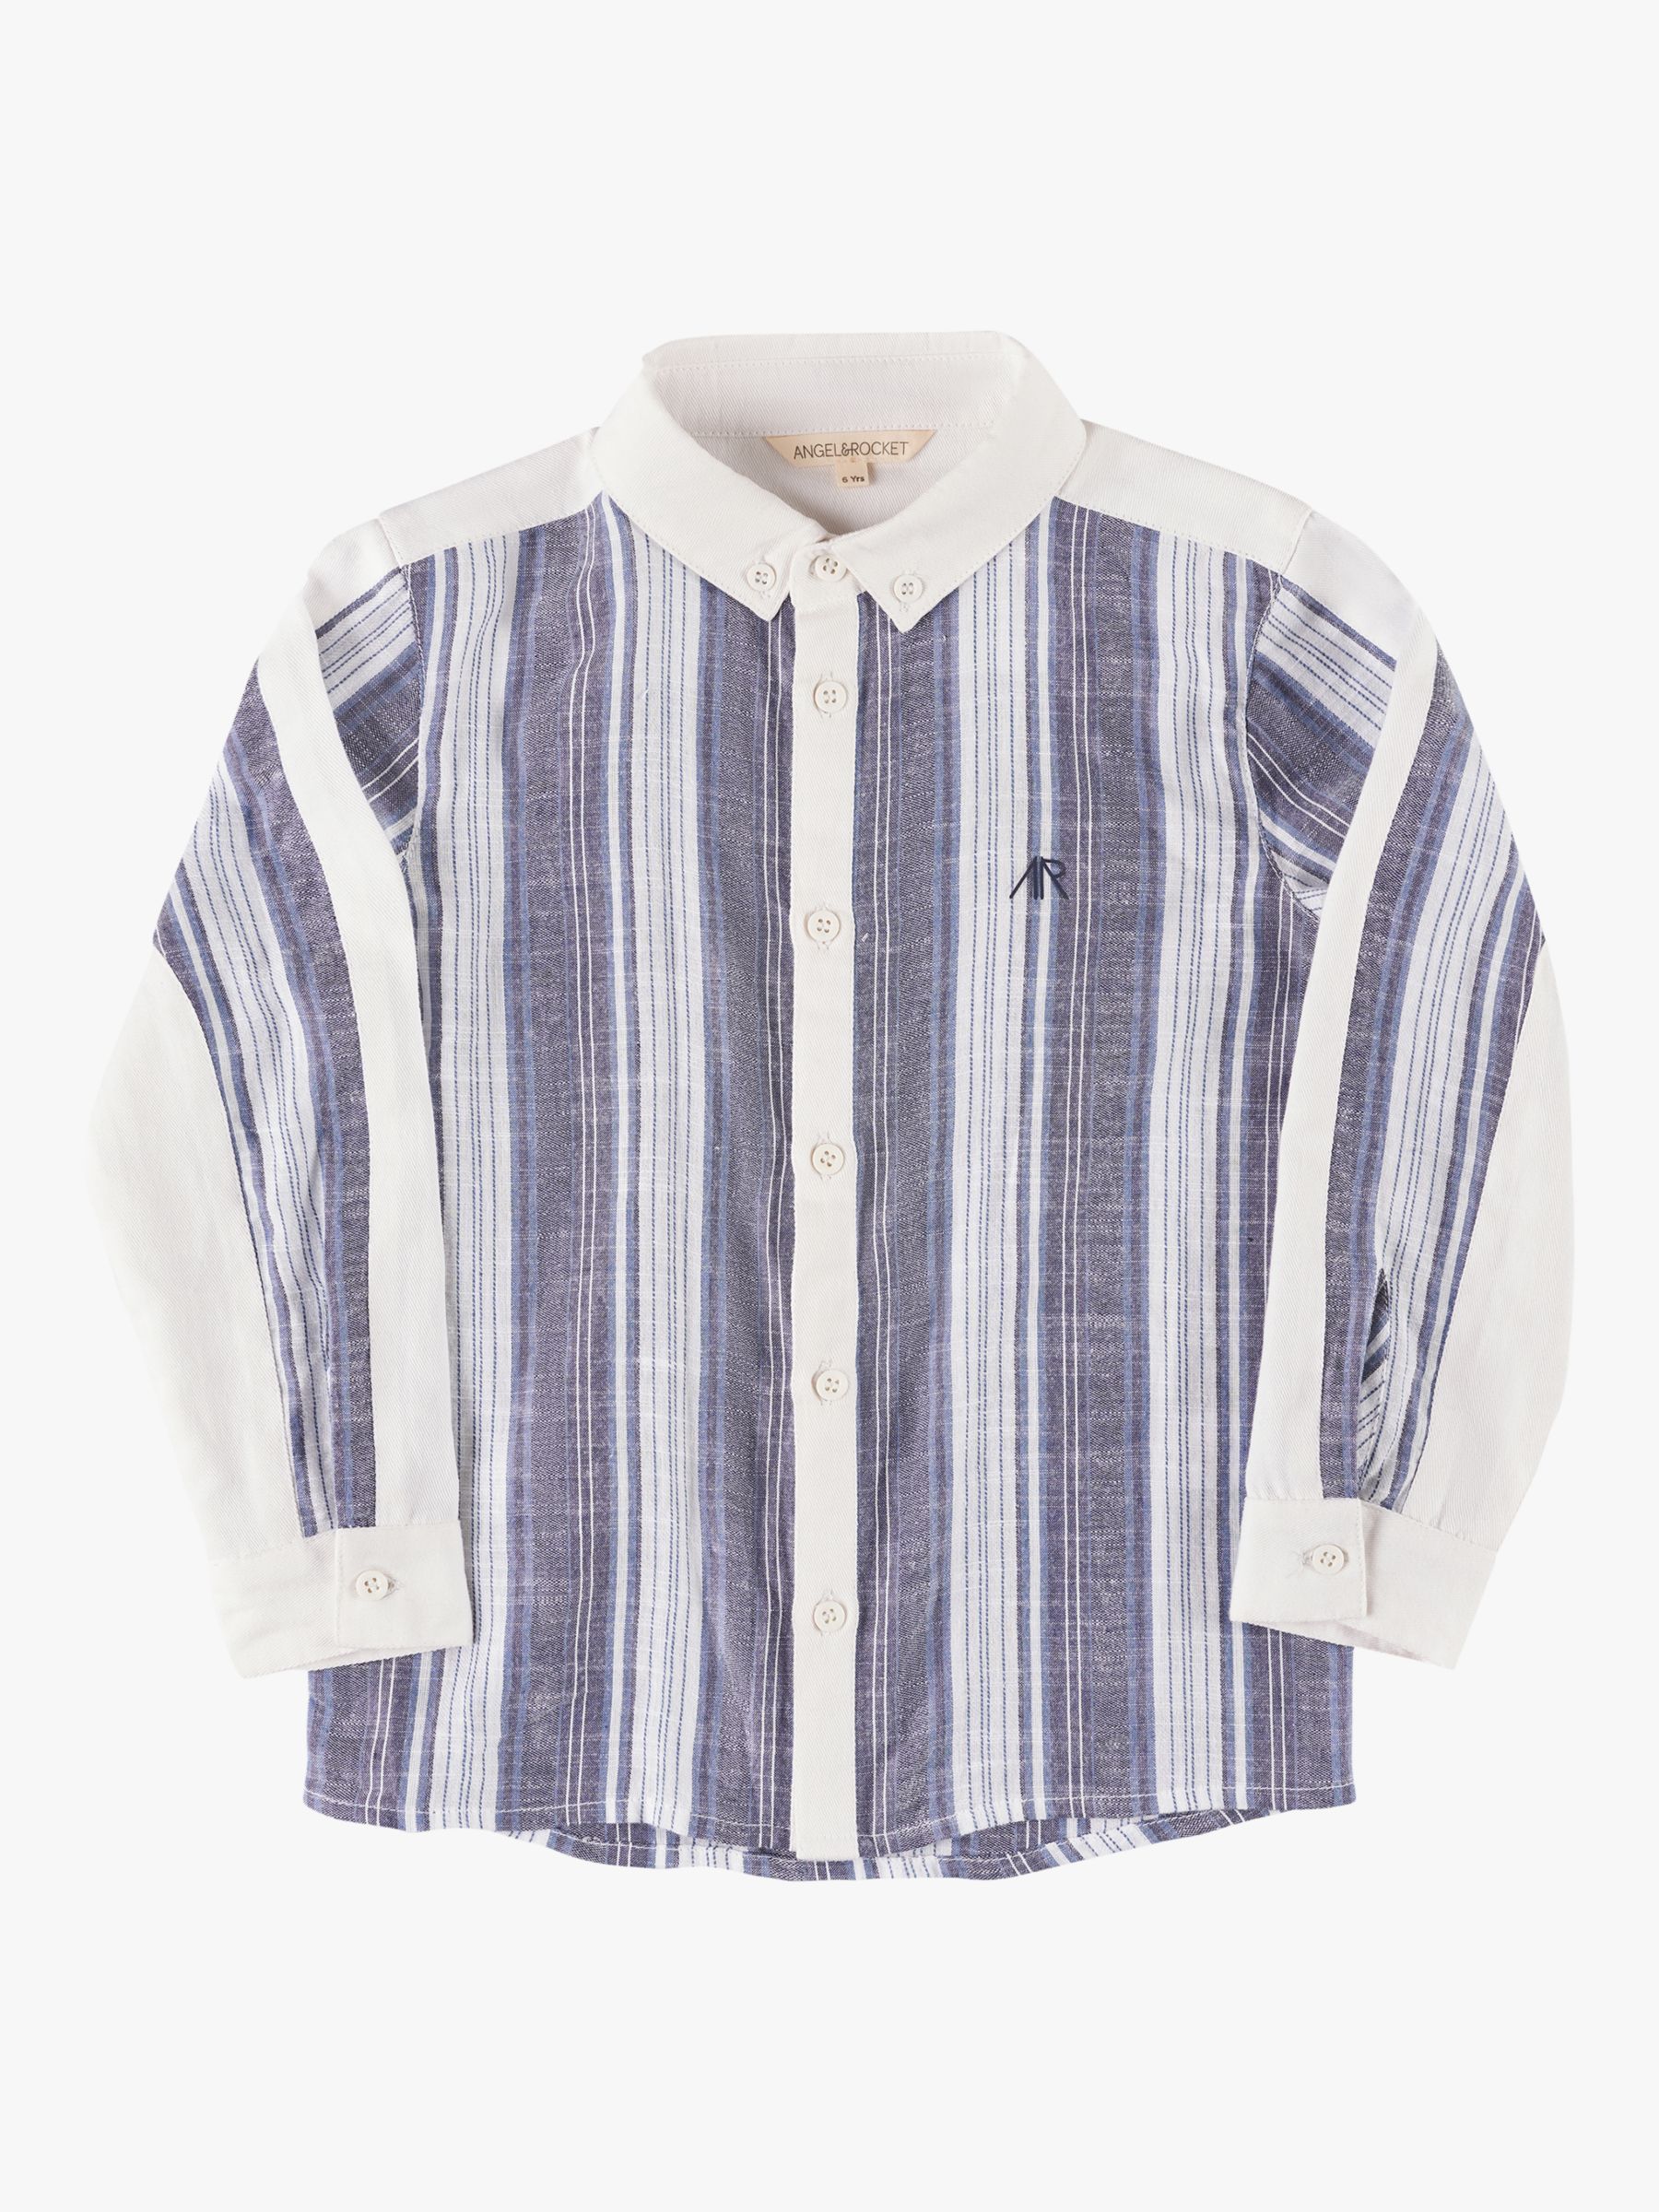 Angel & Rocket Kids' Chase Stripe Cut and Sew Shirt, Blue, 3 years